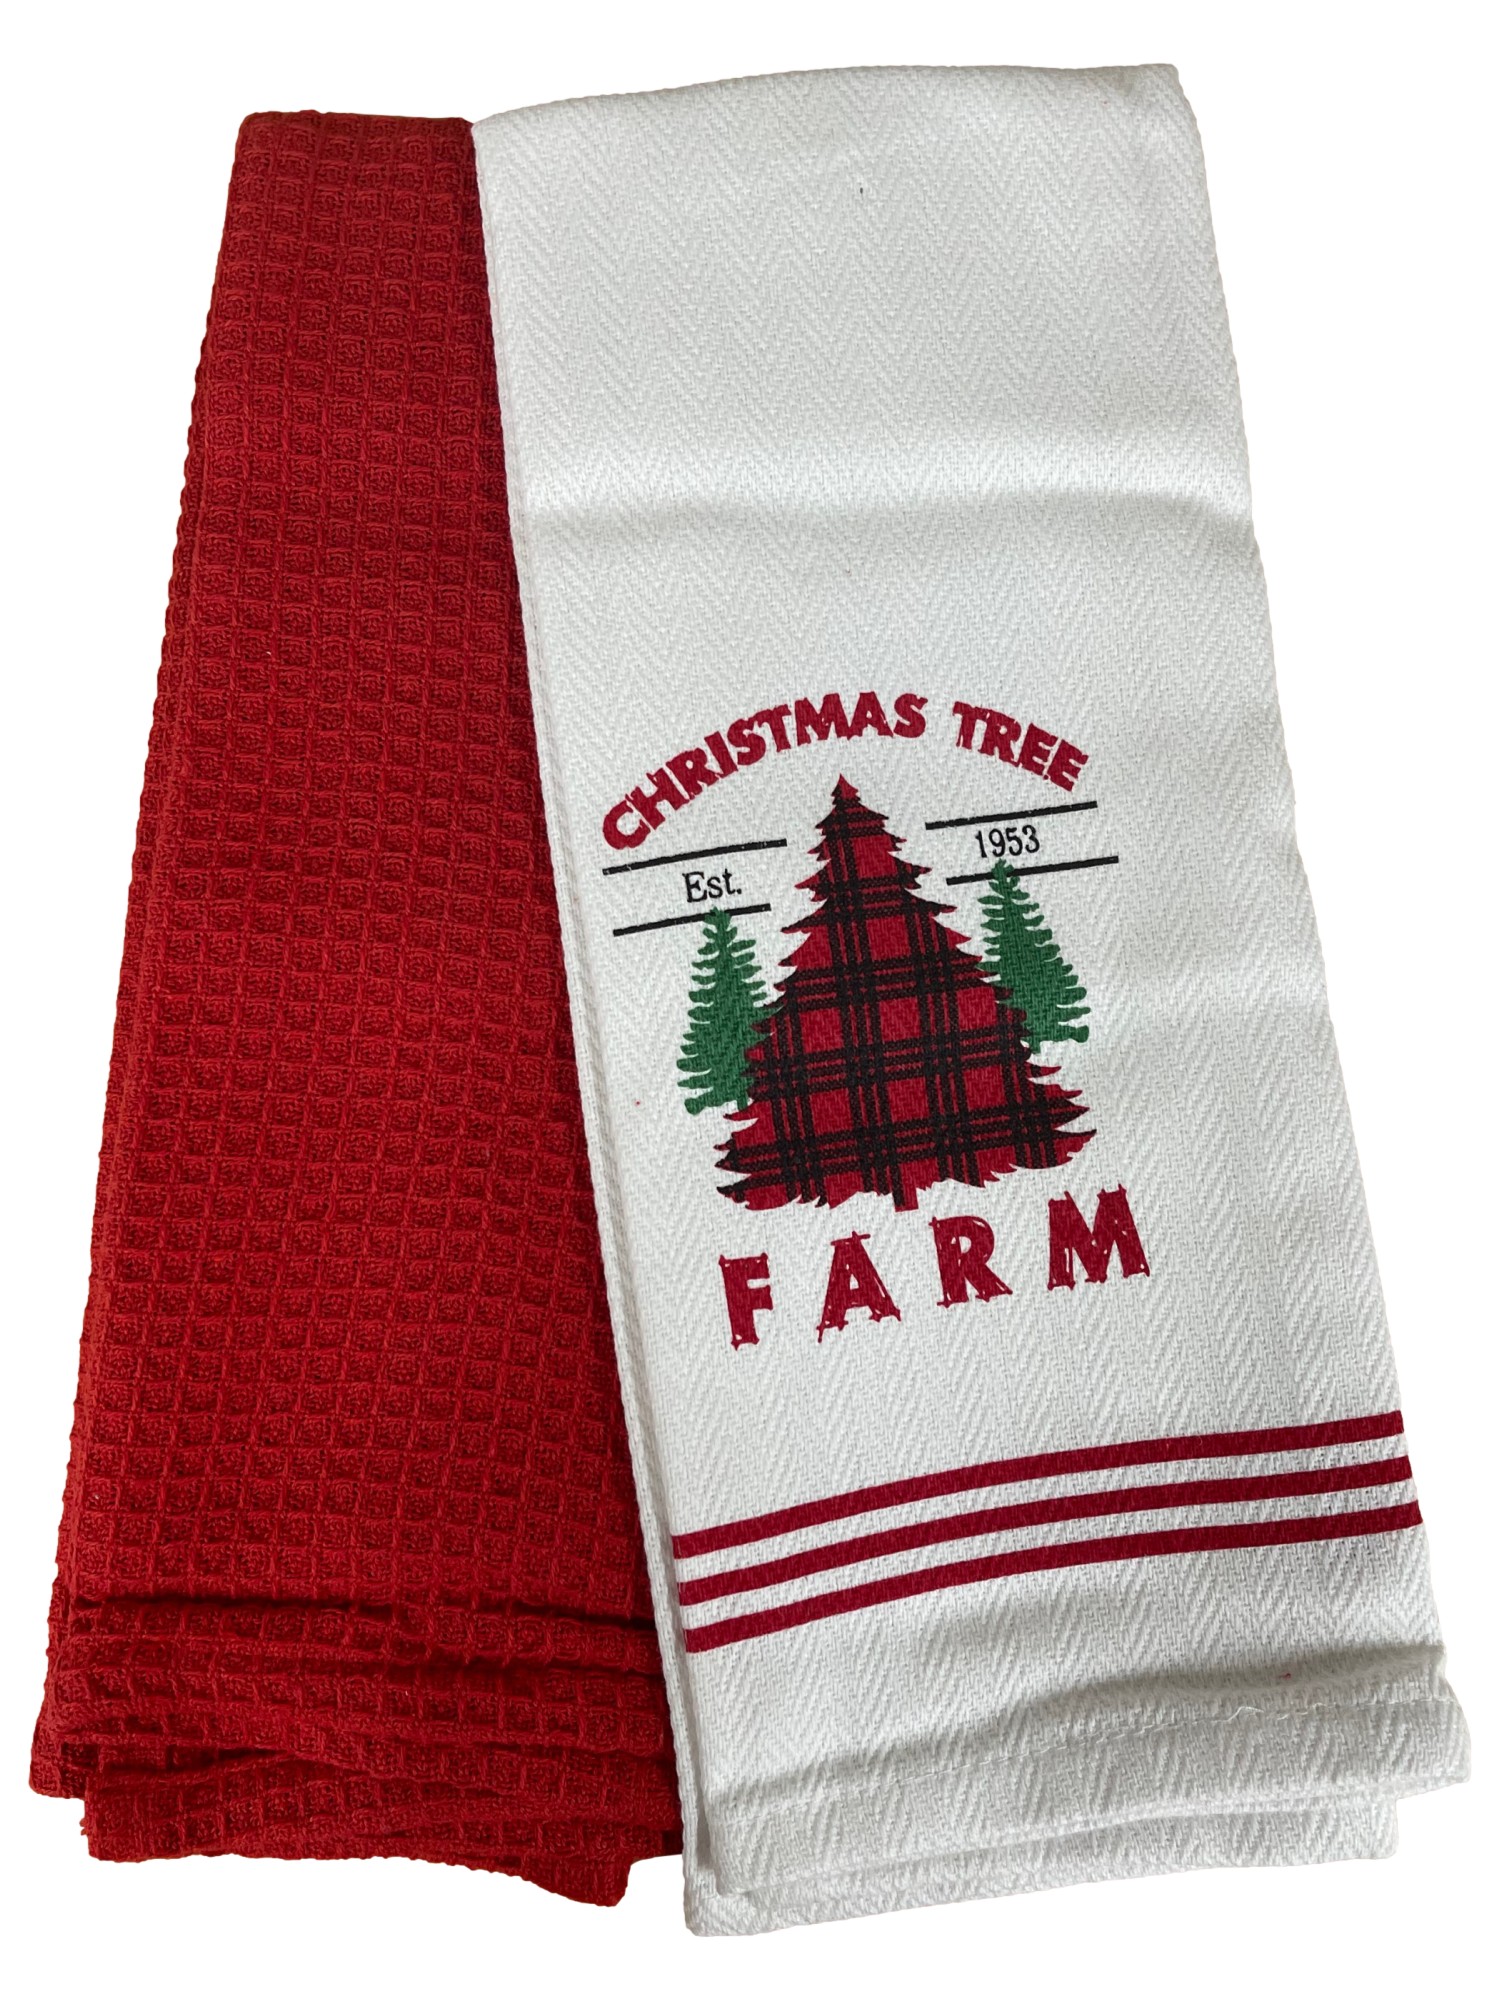 Christmas Tree Farm Red Plaid Holiday Kitchen Towel Set, 2 Cotton Dish Towels